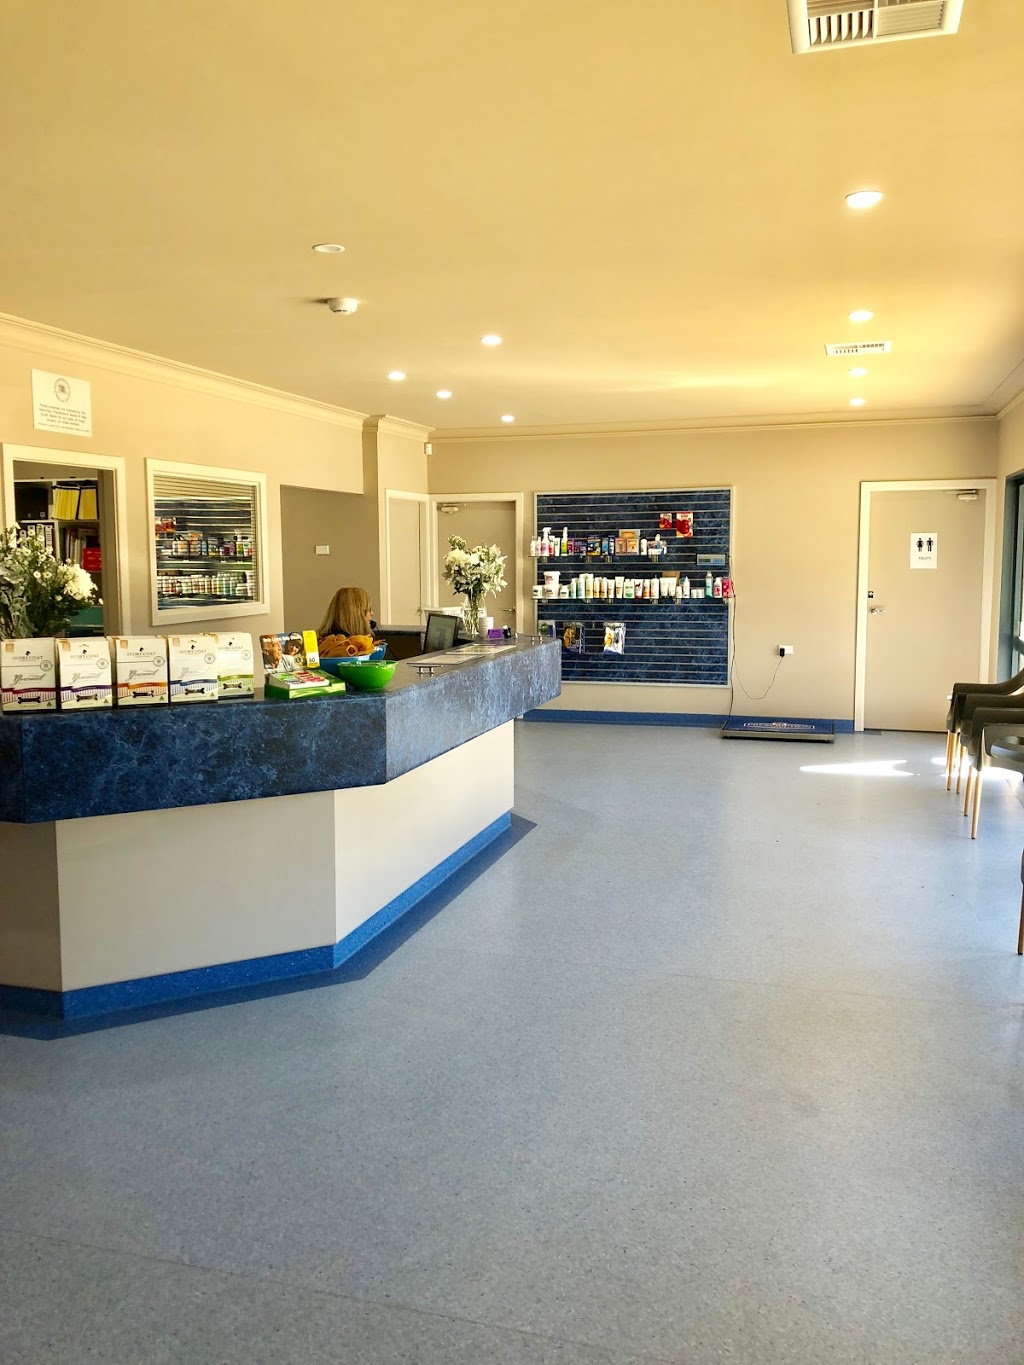 Bowral Veterinary Hospital | veterinary care | 78 Station St, Bowral NSW 2576, Australia | 0248611444 OR +61 2 4861 1444